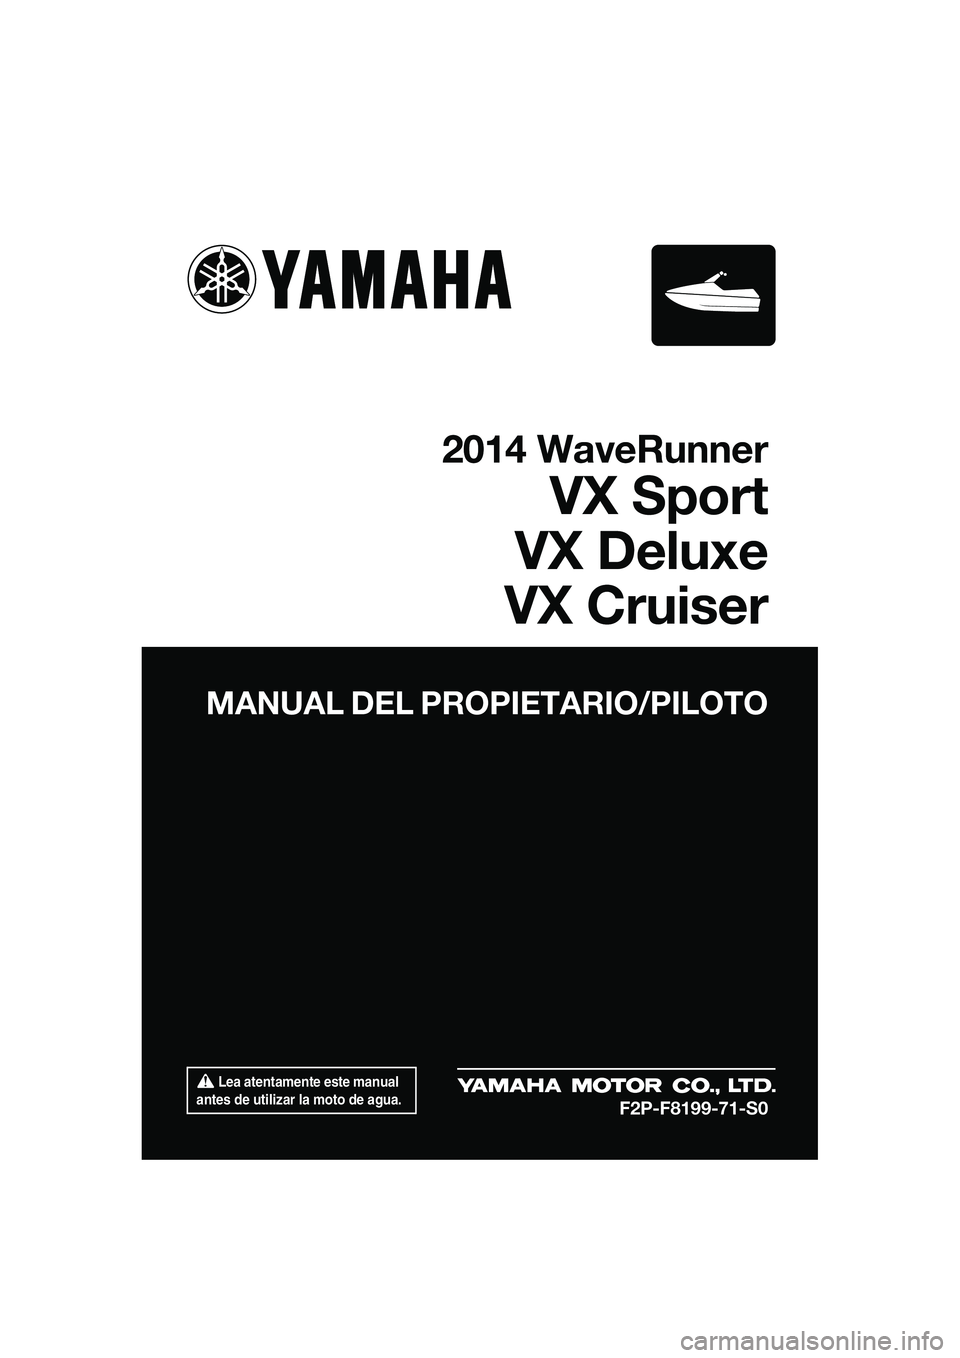 YAMAHA VX CRUISER 2014  Manuale de Empleo (in Spanish)  Lea atentamente este manual 
antes de utilizar la moto de agua.
MANUAL DEL PROPIETARIO/PILOTO
2014 WaveRunner
VX Sport
VX Deluxe
VX Cruiser
F2P-F8199-71-S0
UF2P71S0.book  Page 1  Wednesday, July 10, 